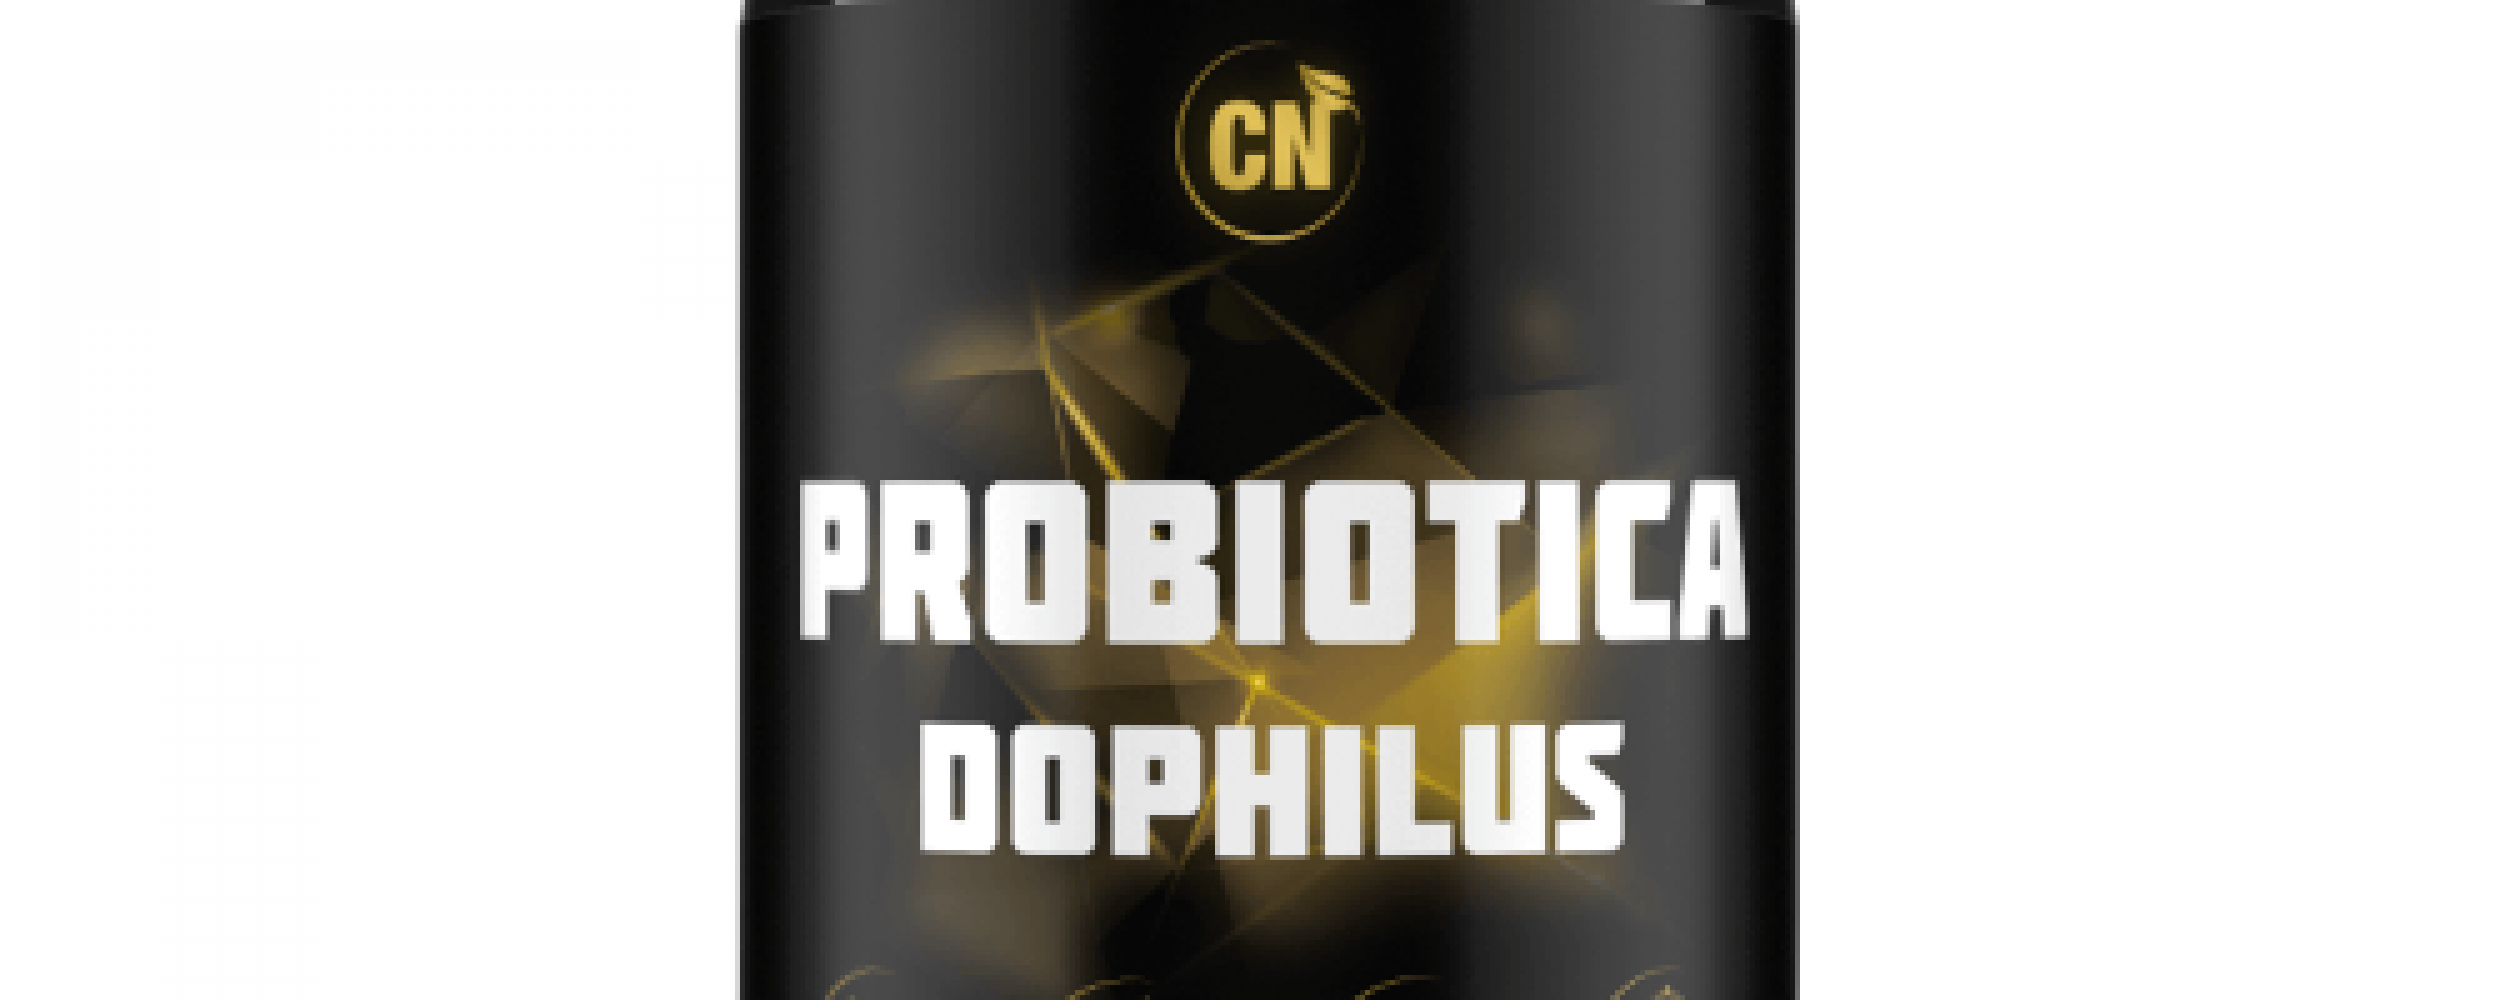 probiotica-dolphilus-clean-nutrition-joel-beukers-500x500